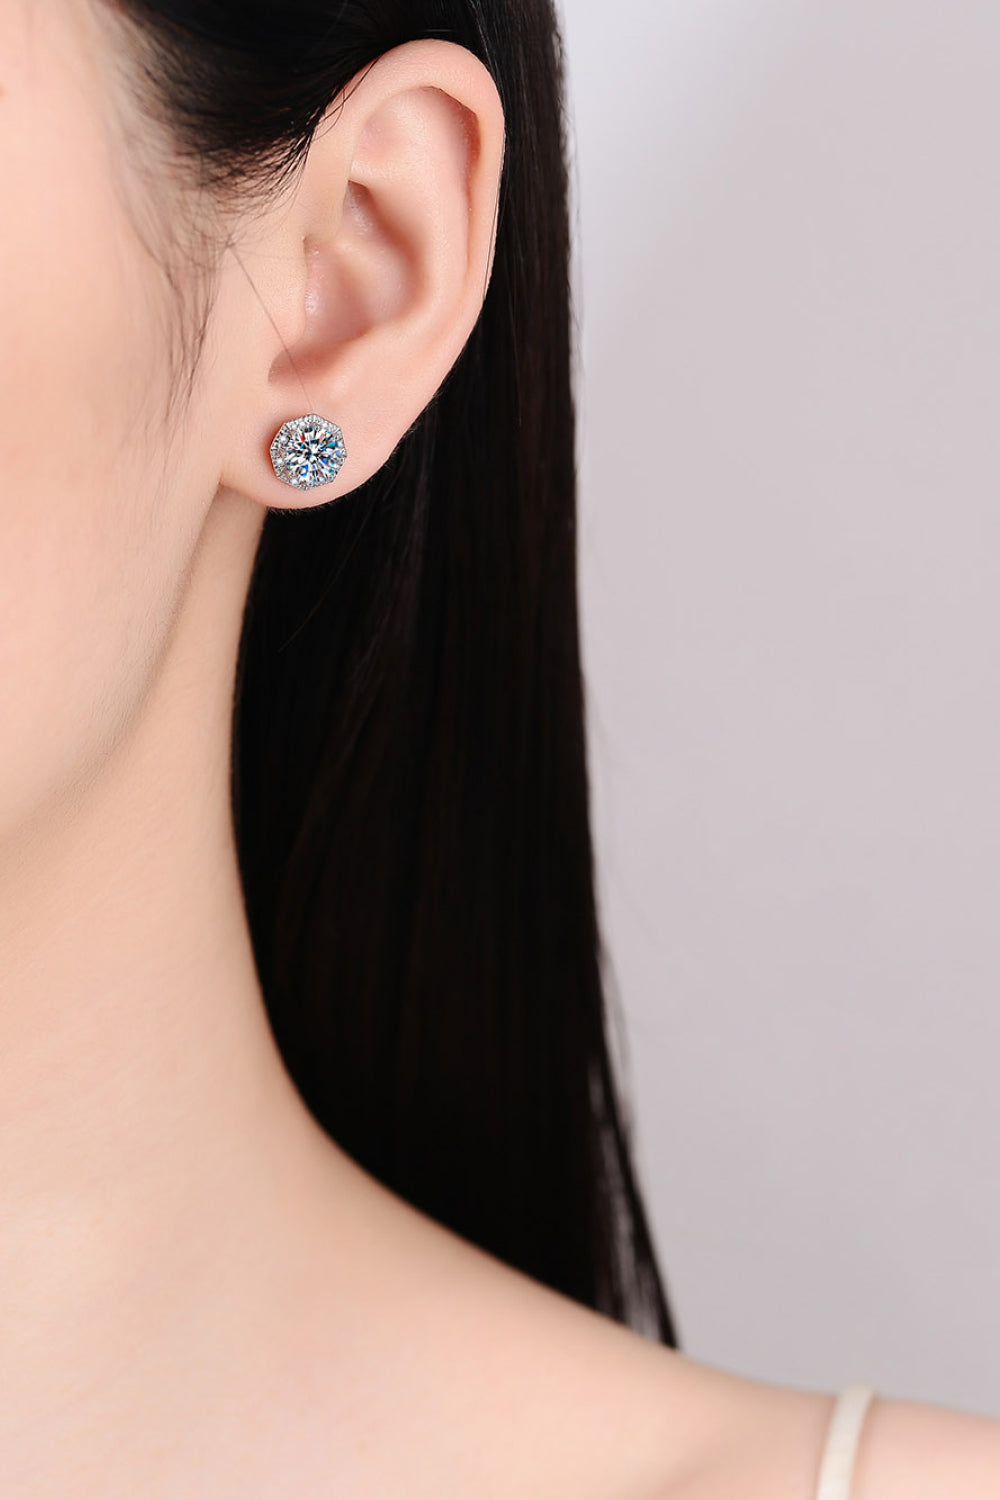 2 Carat Moissanite 925 Sterling Silver Stud Earrings apparel & accessories